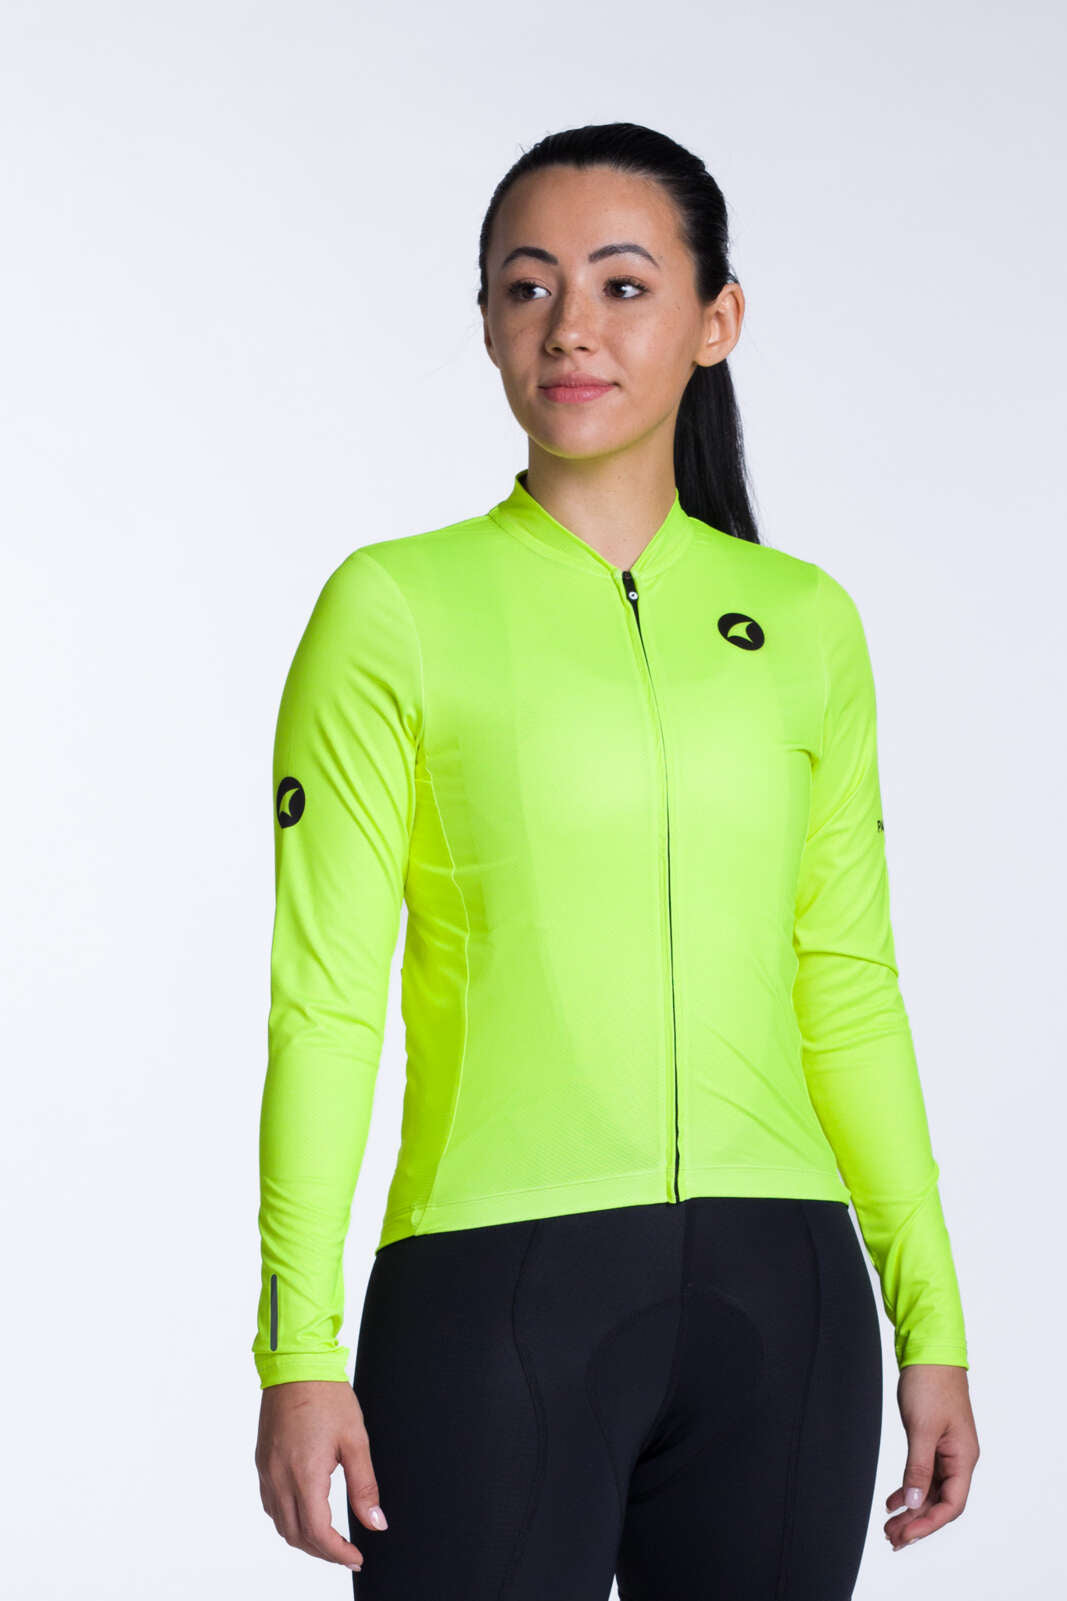 Women's High-Viz Yellow Long Sleeve Cycling Jersey - Ascent Front View